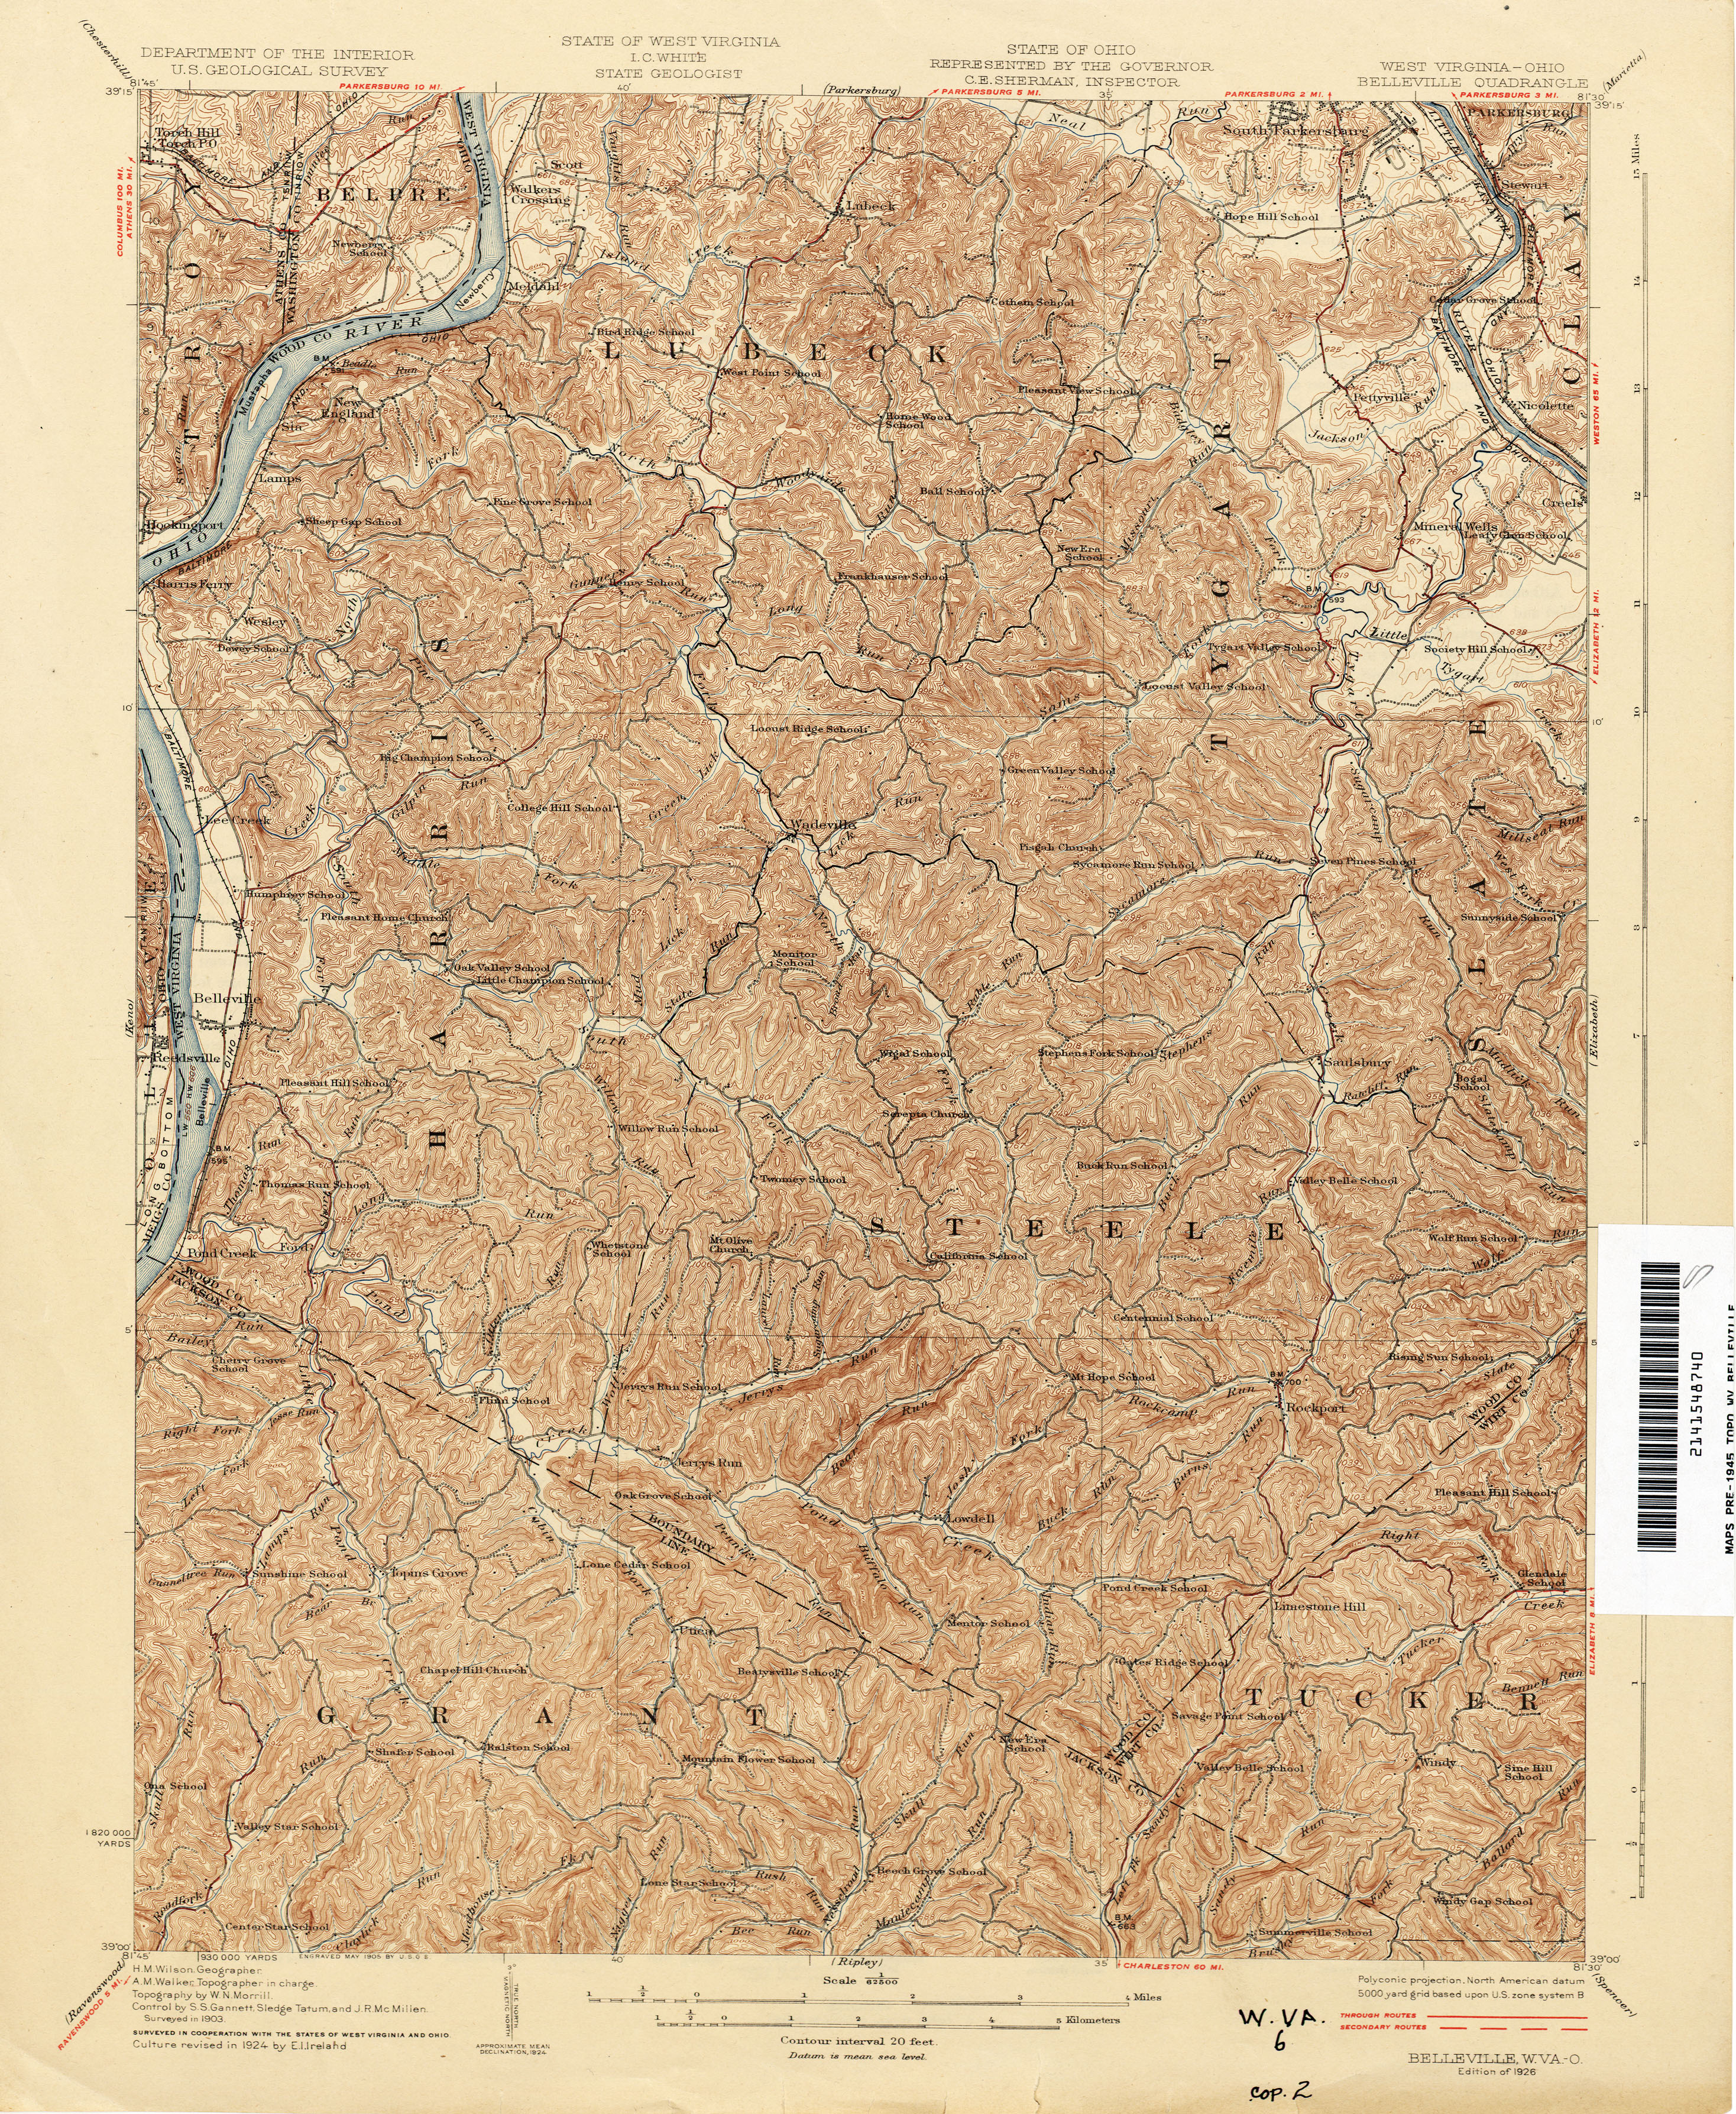 Meade Proctor Pinegrove Antique Littleton West Virginia 1905 US Geological Survey Topographic Map \u2013 Wetzel County Galmish Jacksonburg